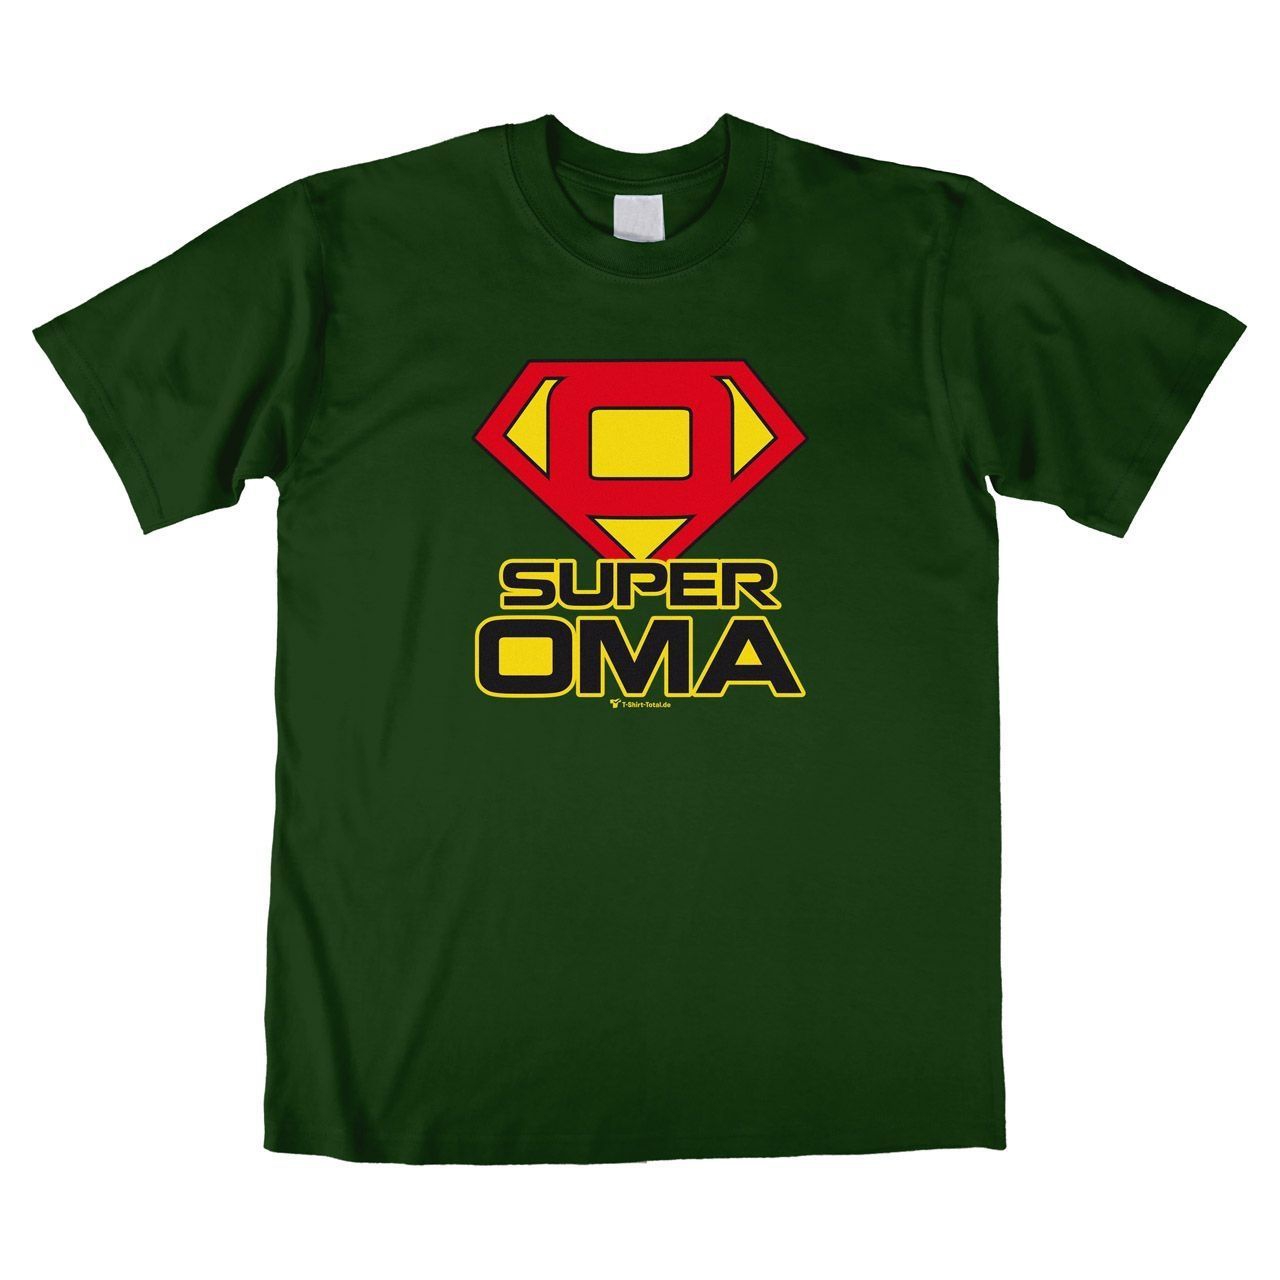 Super Oma Unisex T-Shirt dunkelgrün Medium